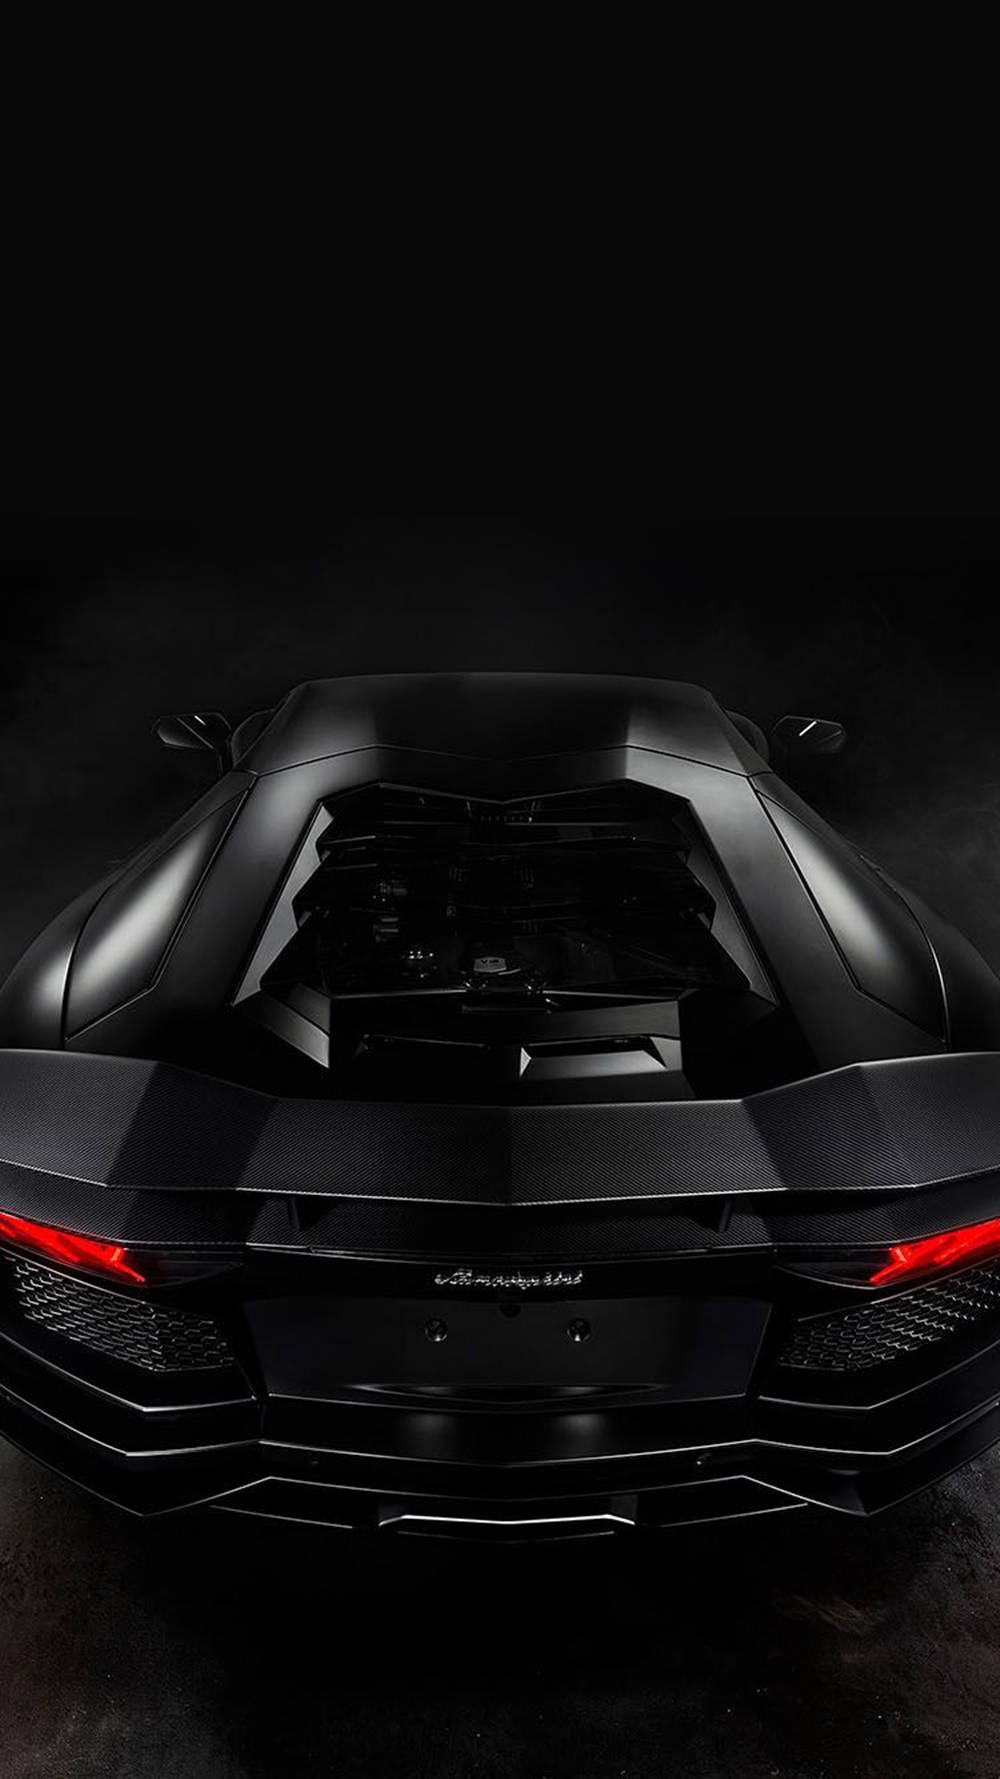 Elite And Chic - Iphone Meets Lamborghini Background